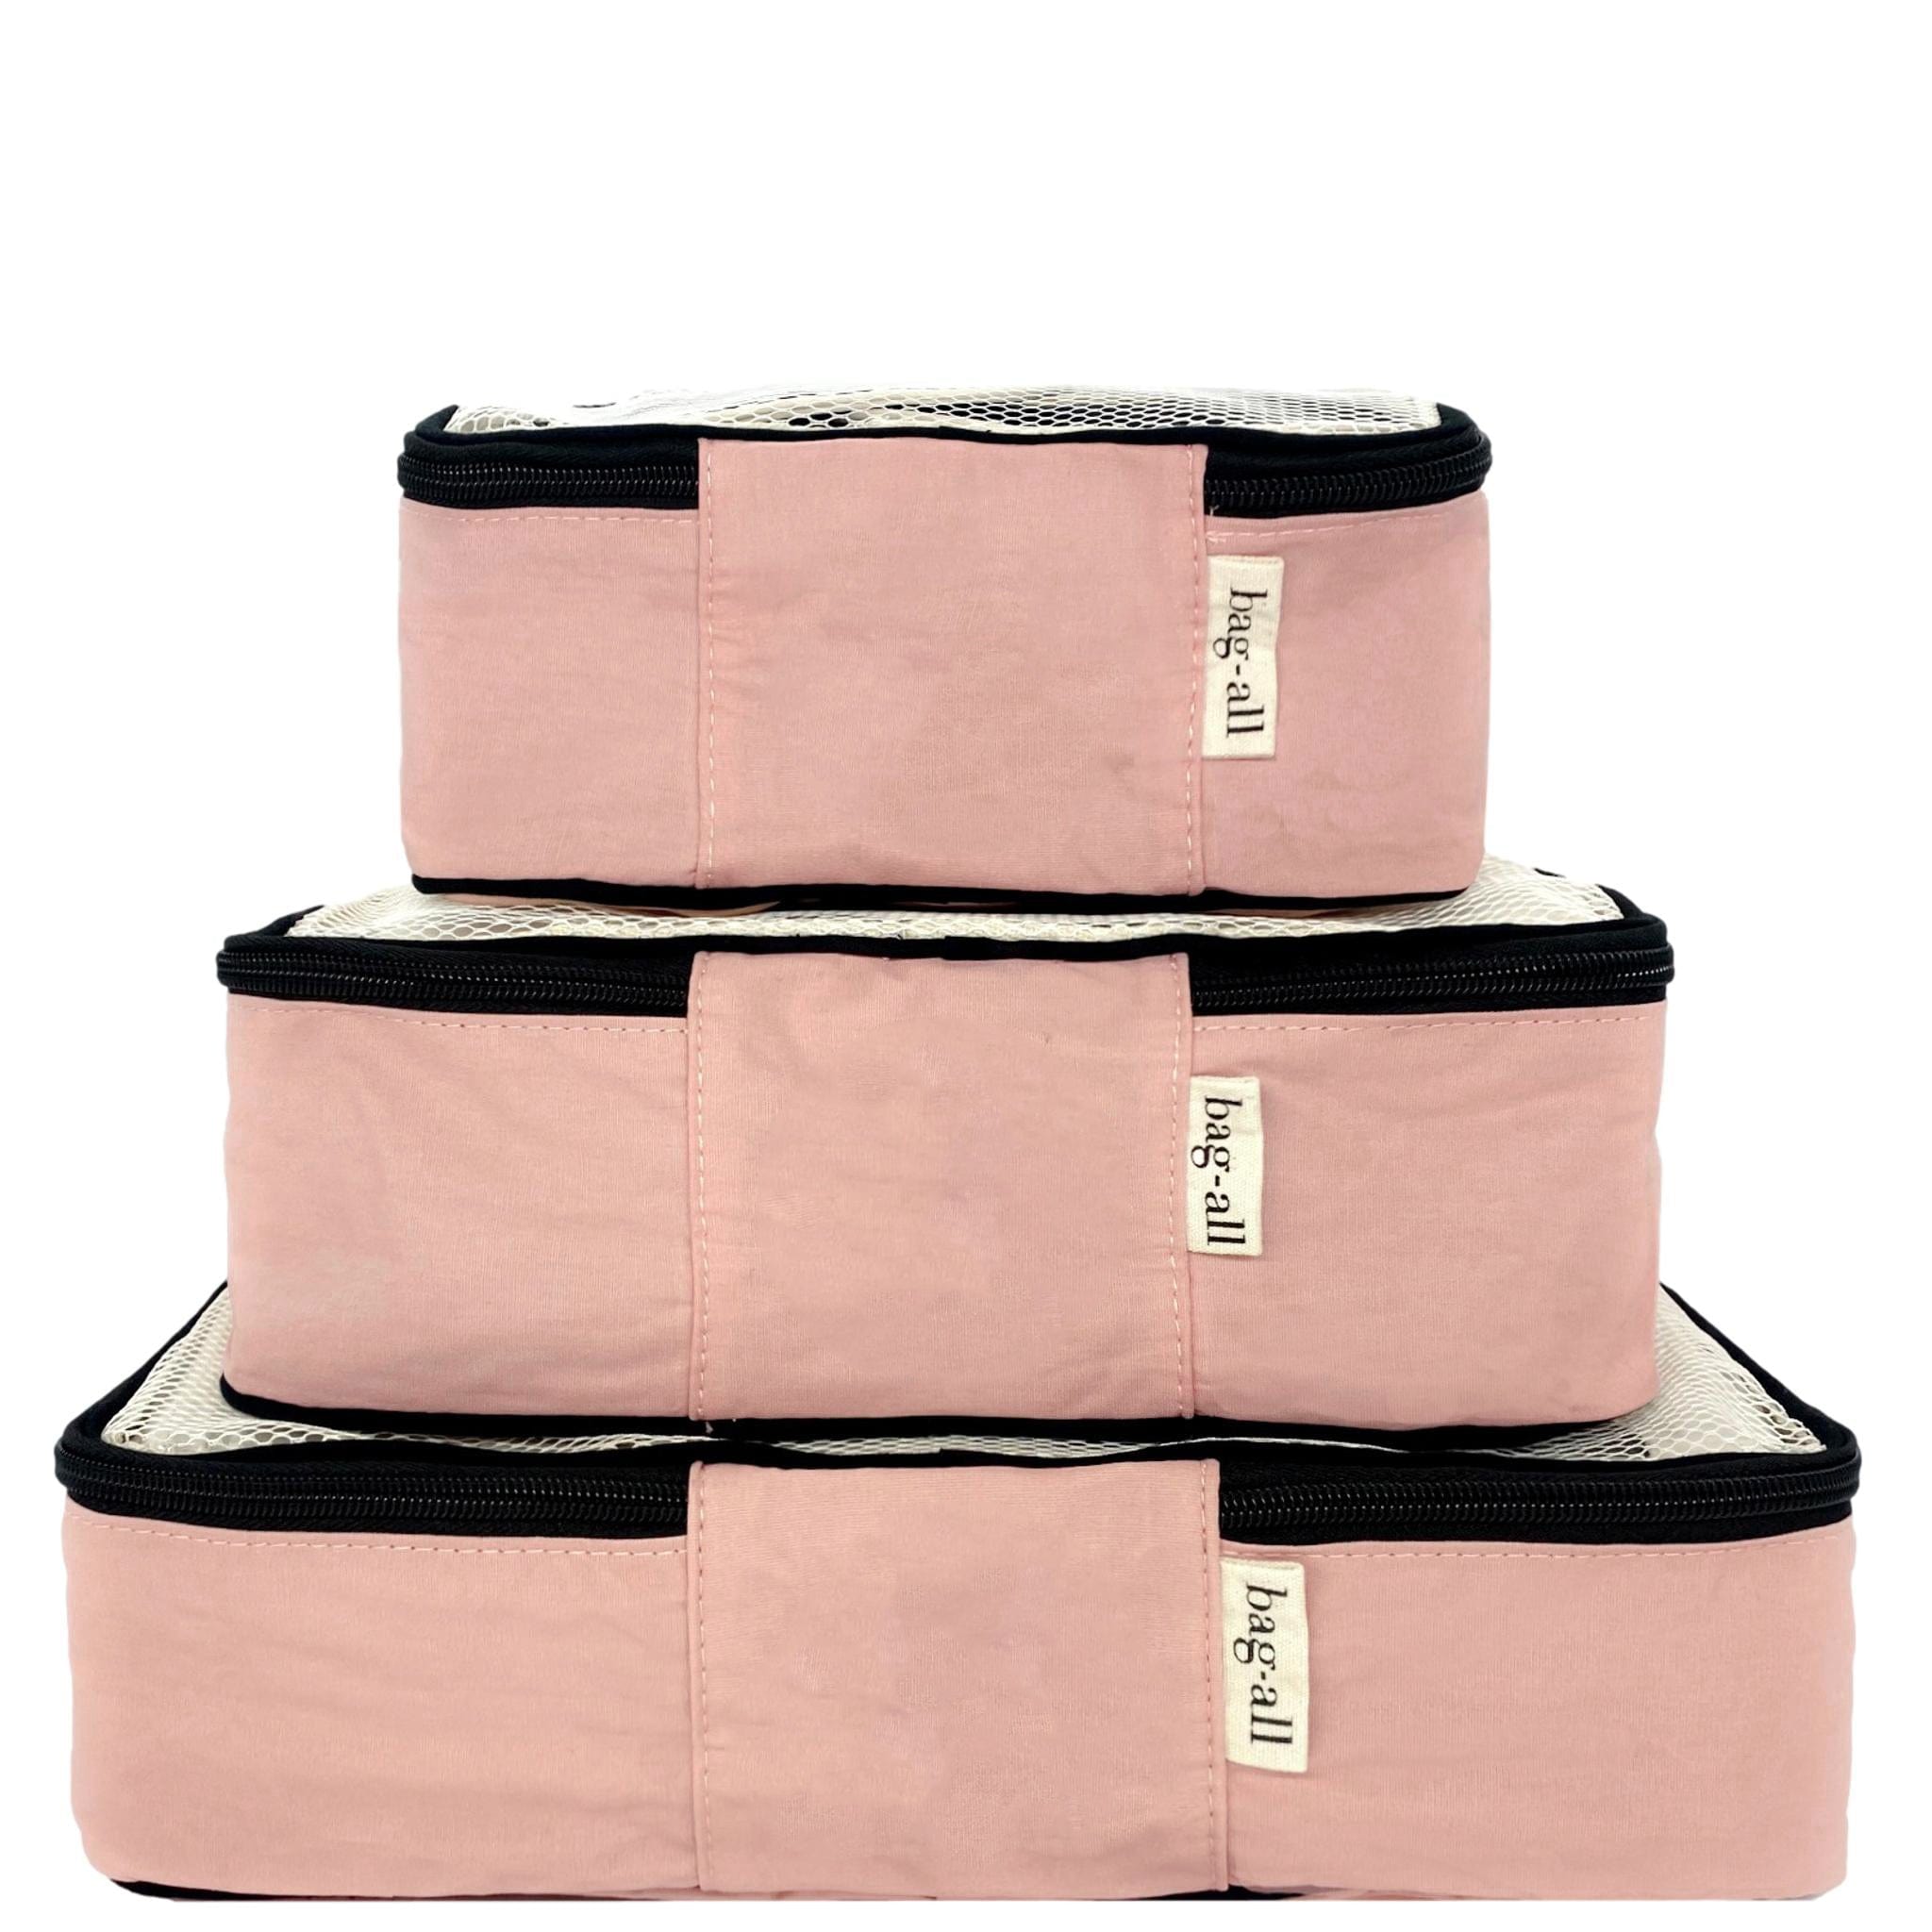 Cutest 3 Sizes Cotton Packing Cubes, Travel Organizing Set Pink/Blush - Bag-all